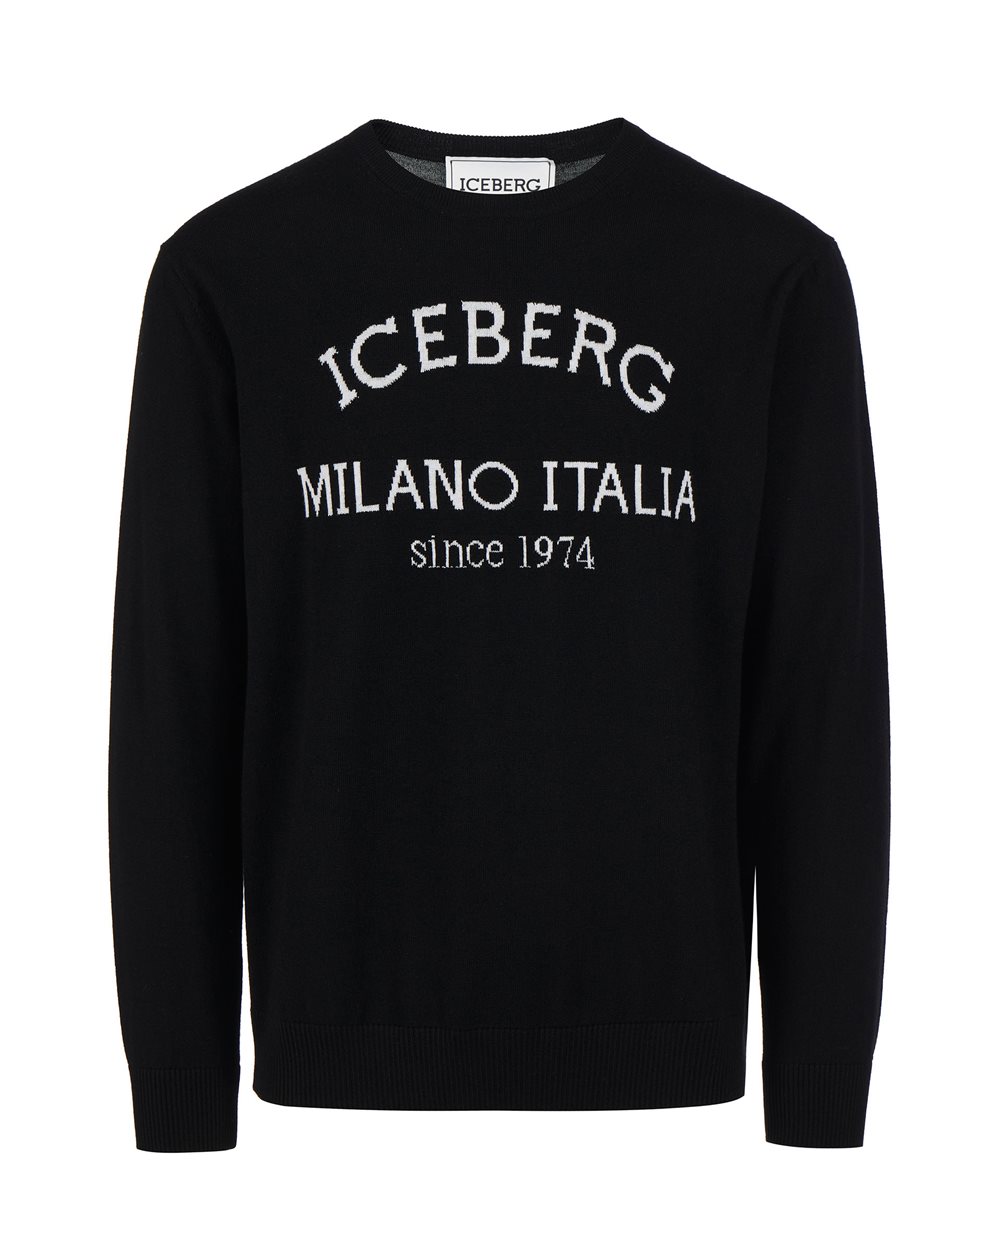 Black jumper with heritage logo - Man | Iceberg - Official Website